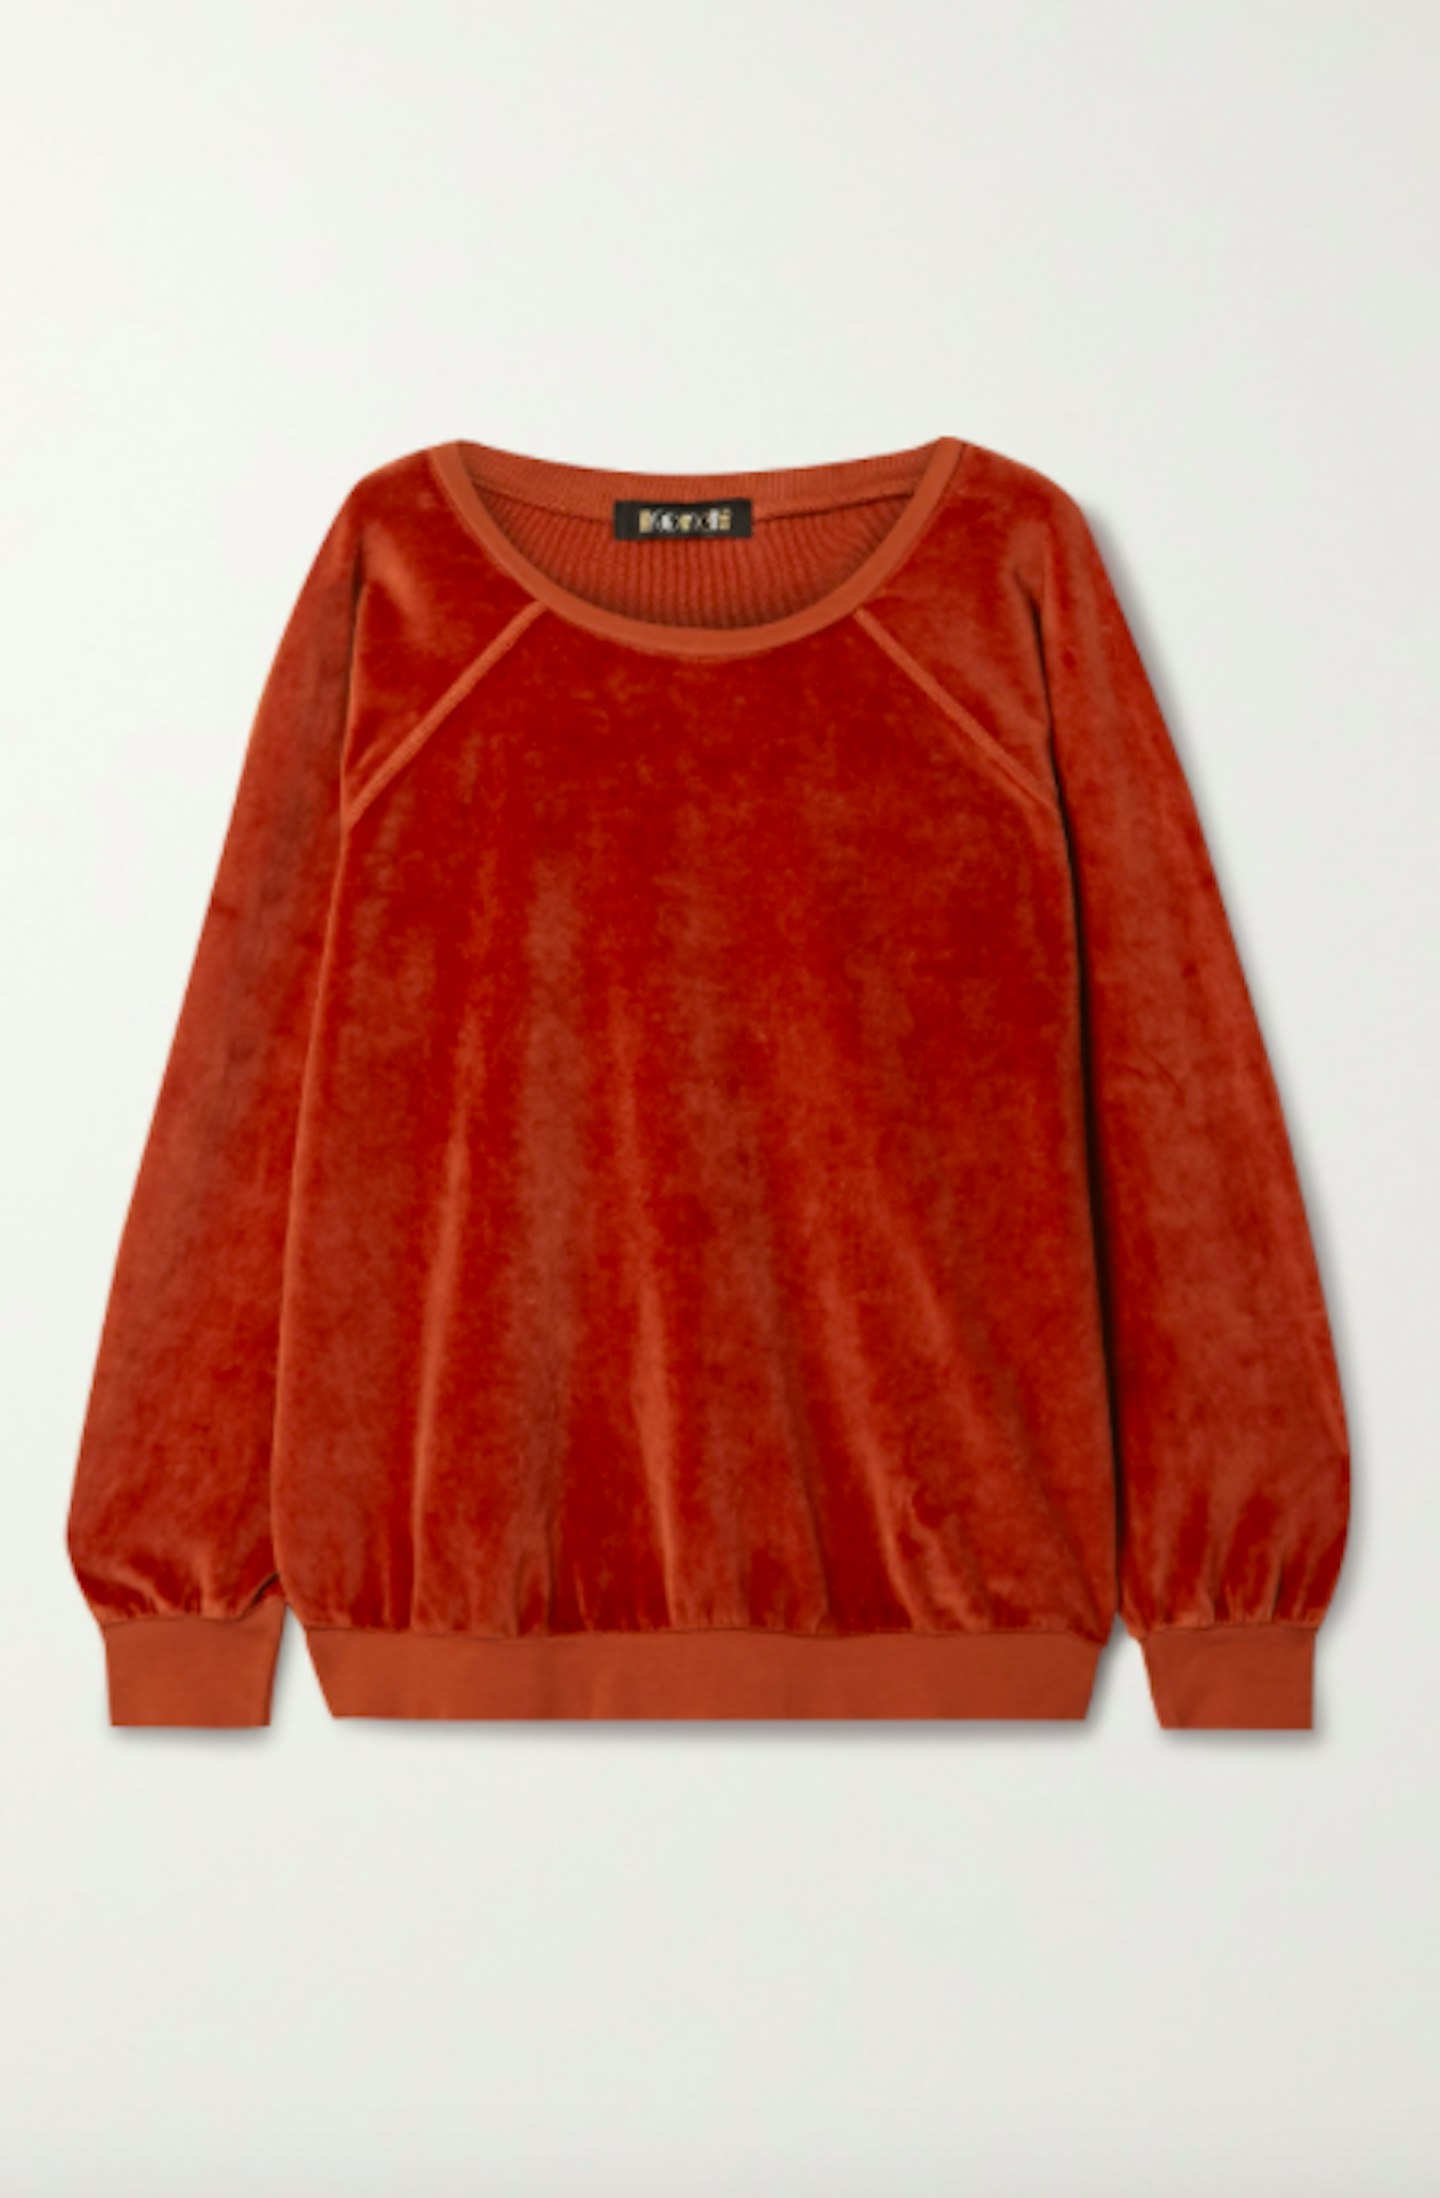 Suzie Kondi, Velour Sweatshirt, £220 at Net-a-Porter